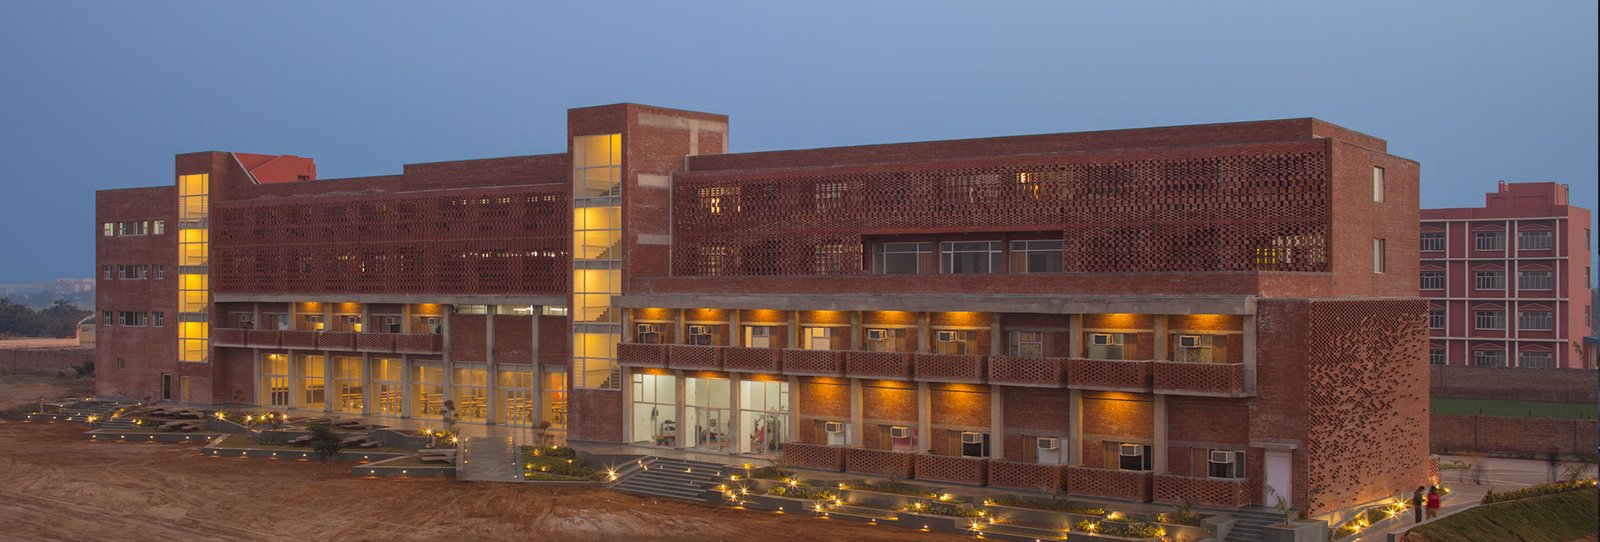 St. Andrews Institute Of Technology And Management - [SAITM], Gurgaon